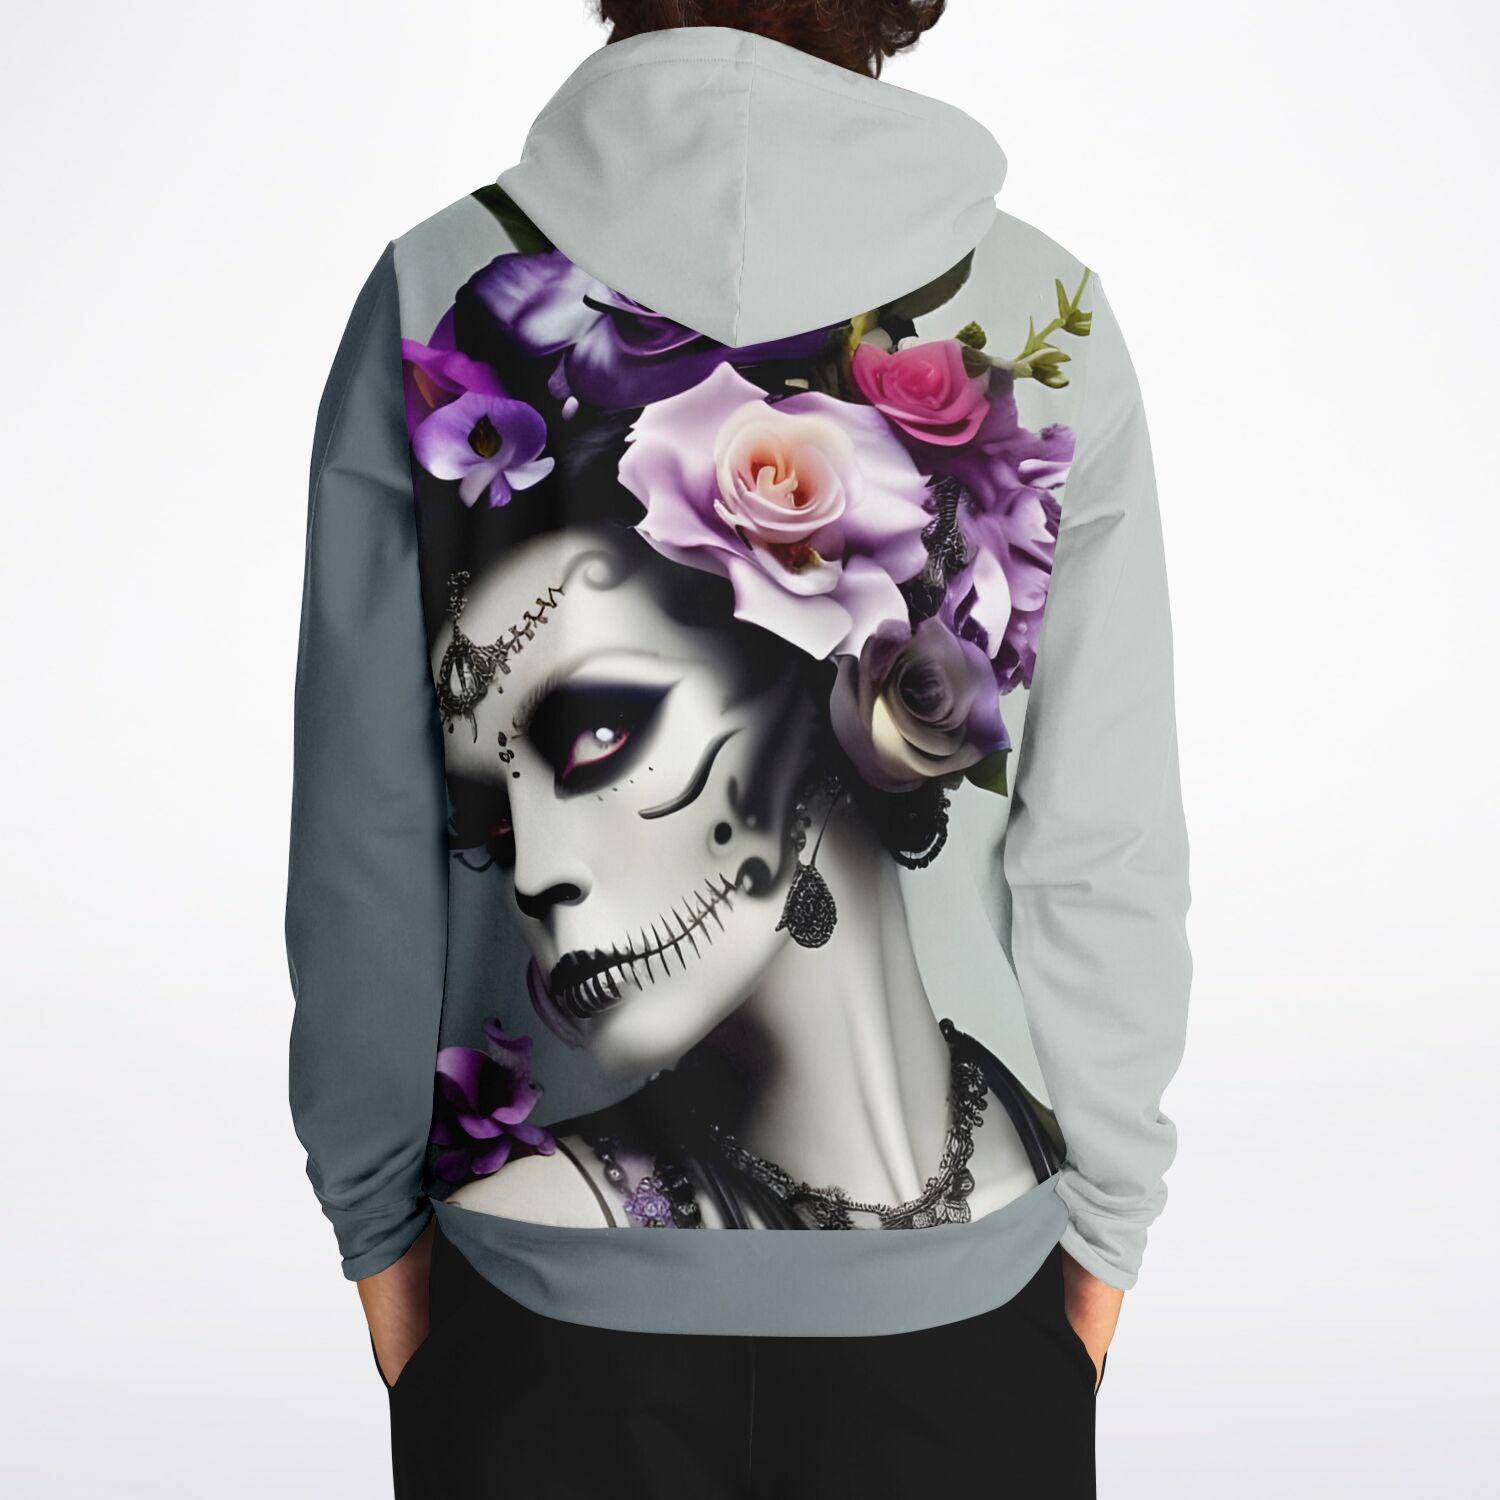 Lady Santa Muerte Skull and Purple Roses Fashion Hoodie